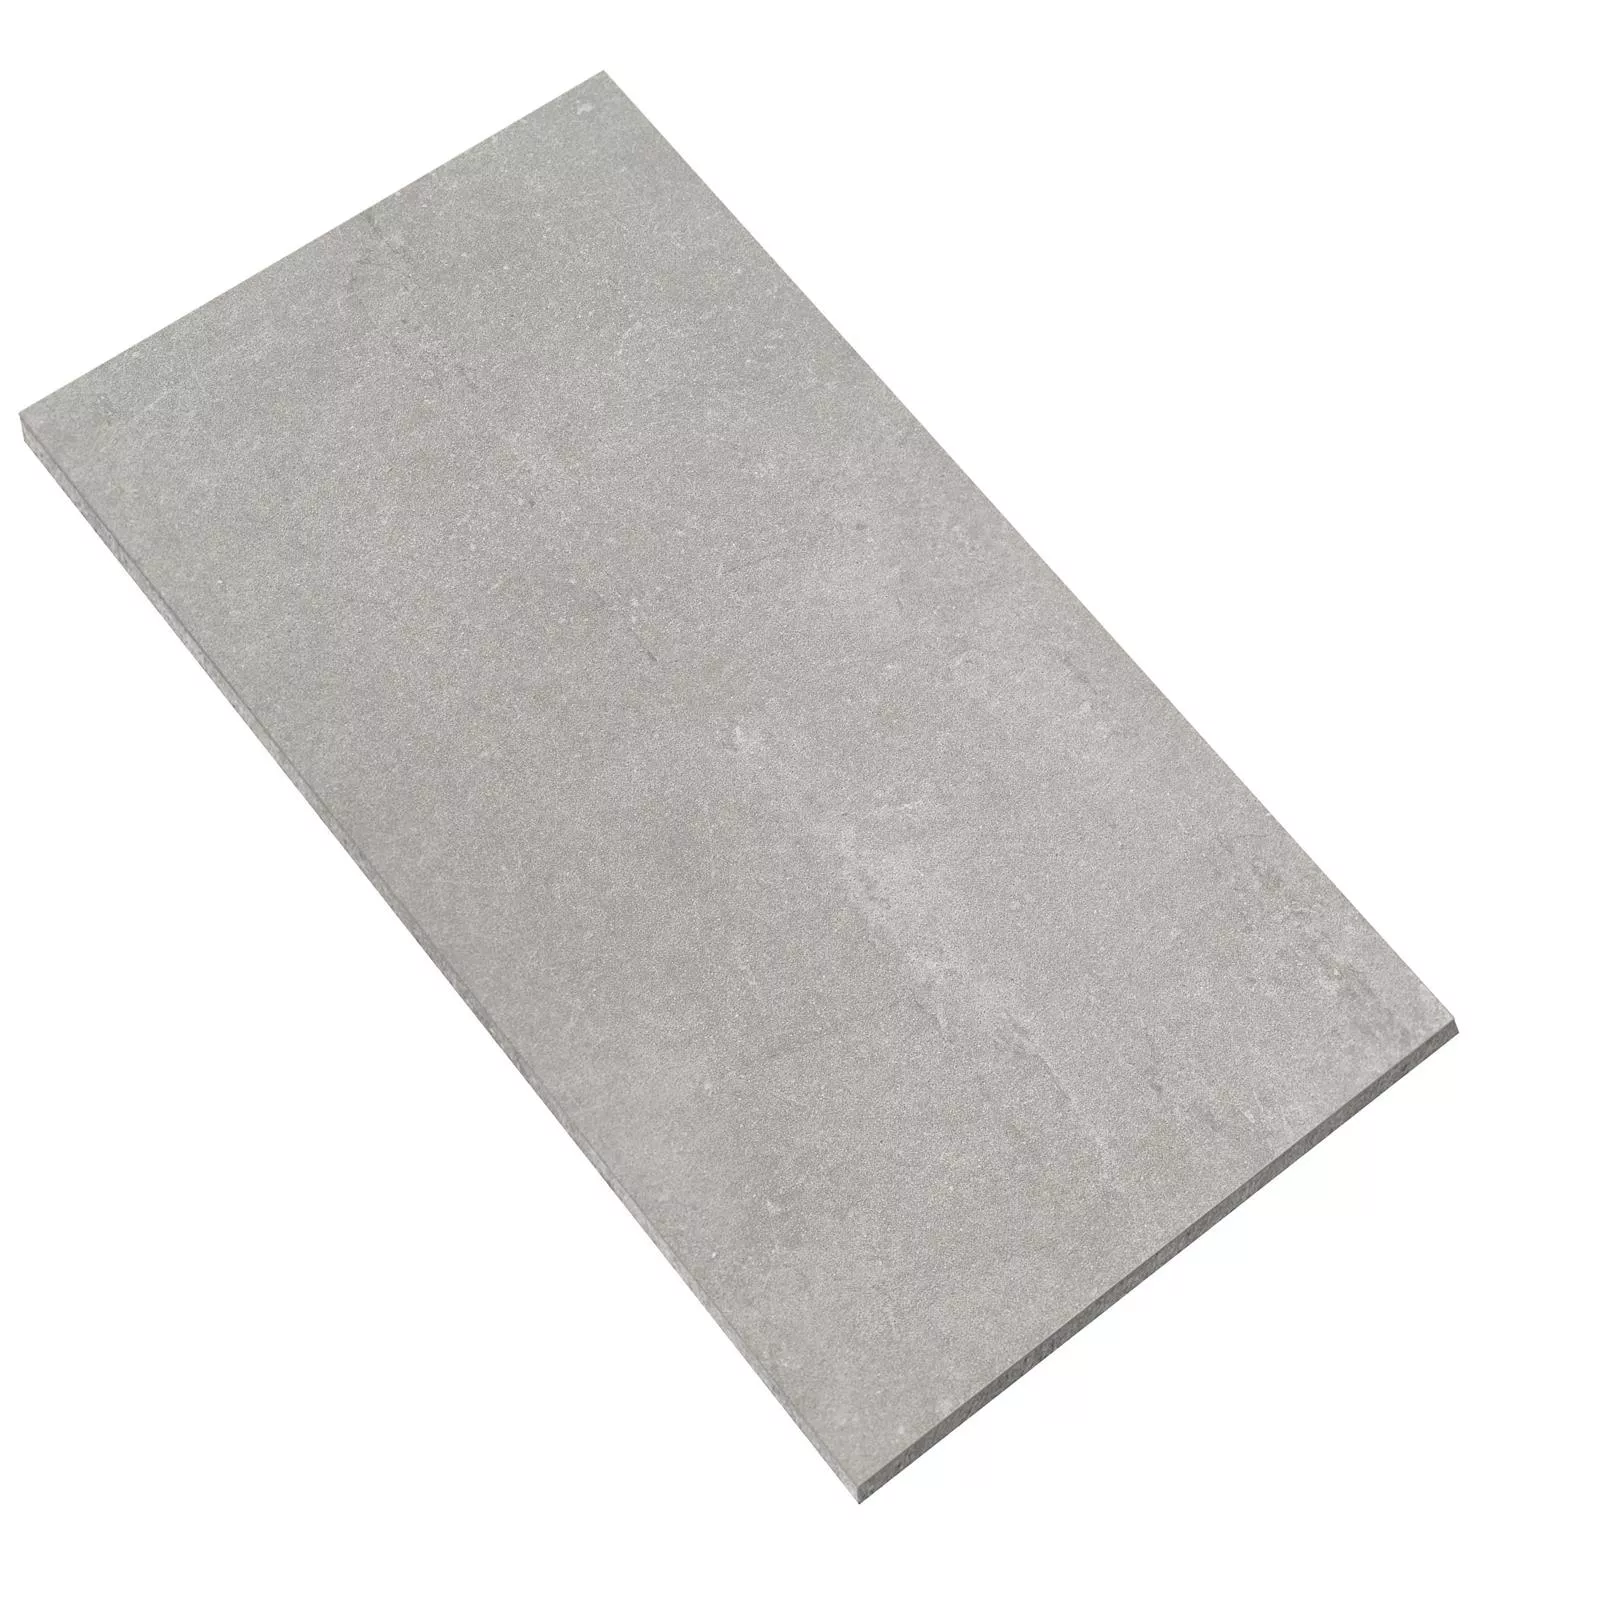 Sample Vloertegels Cement Optic Nepal Slim Grijs 30x60cm